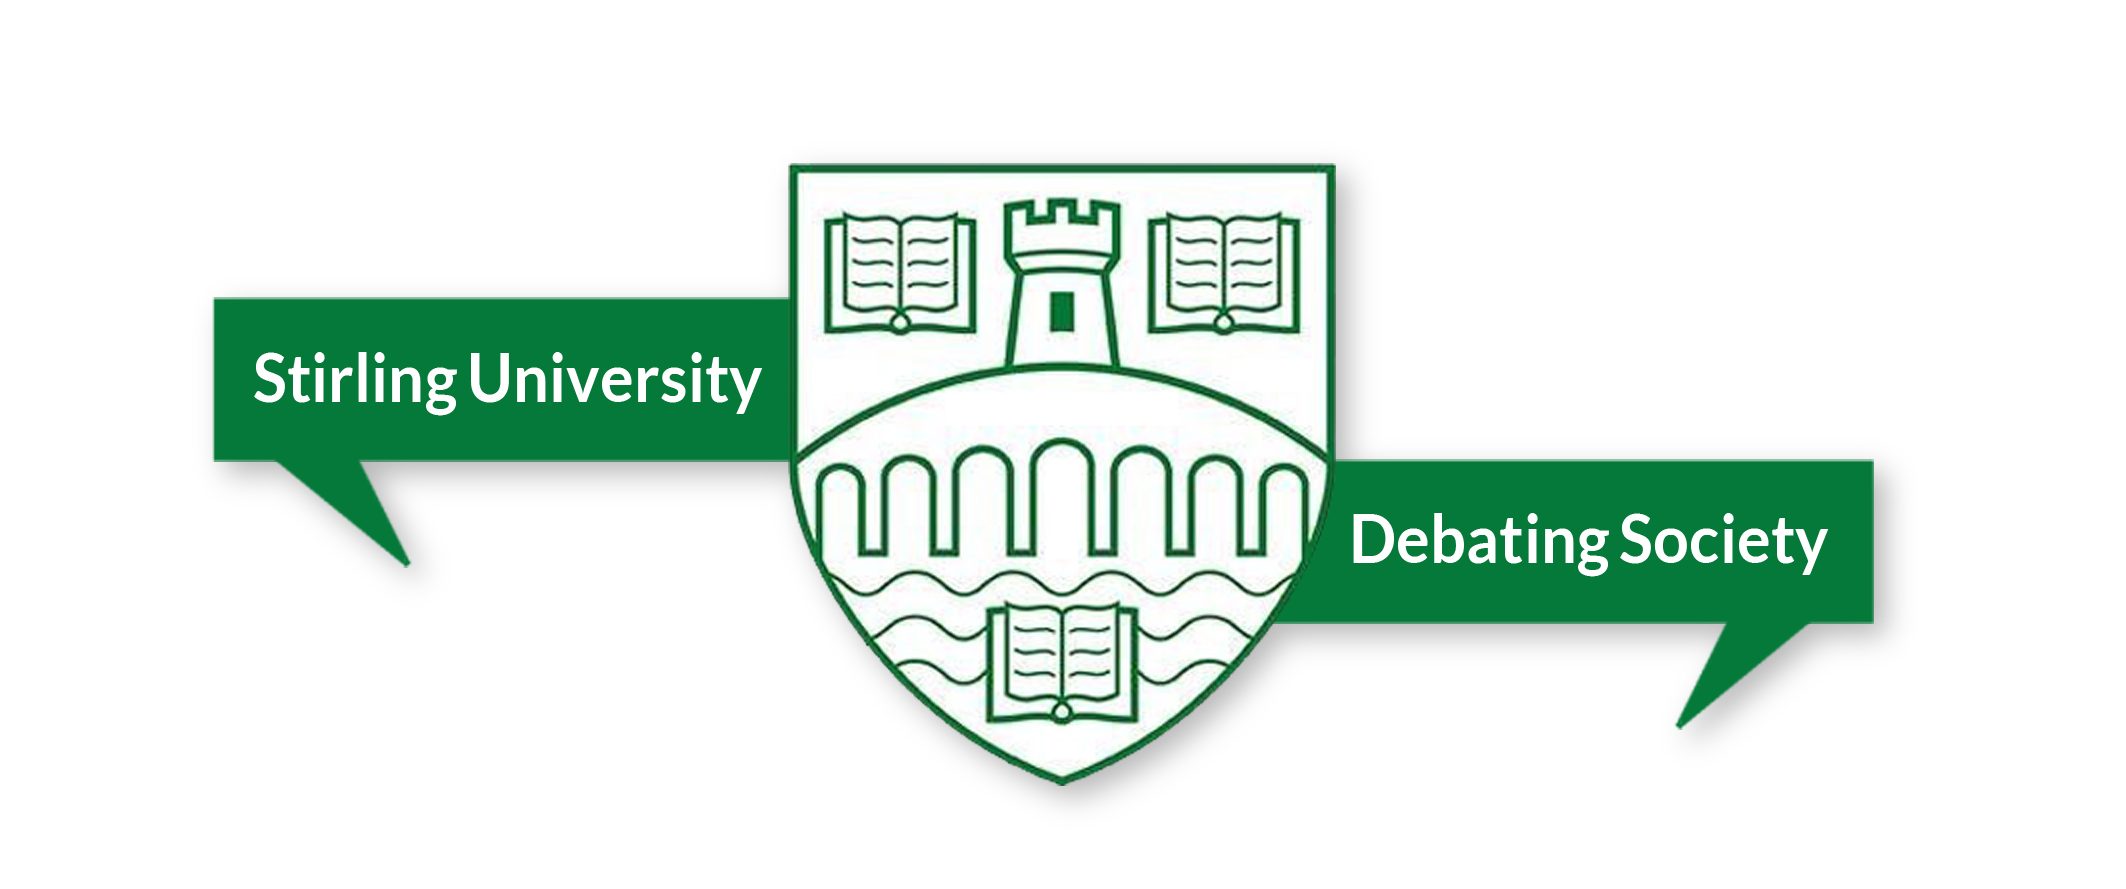 Stirling University Debating Society